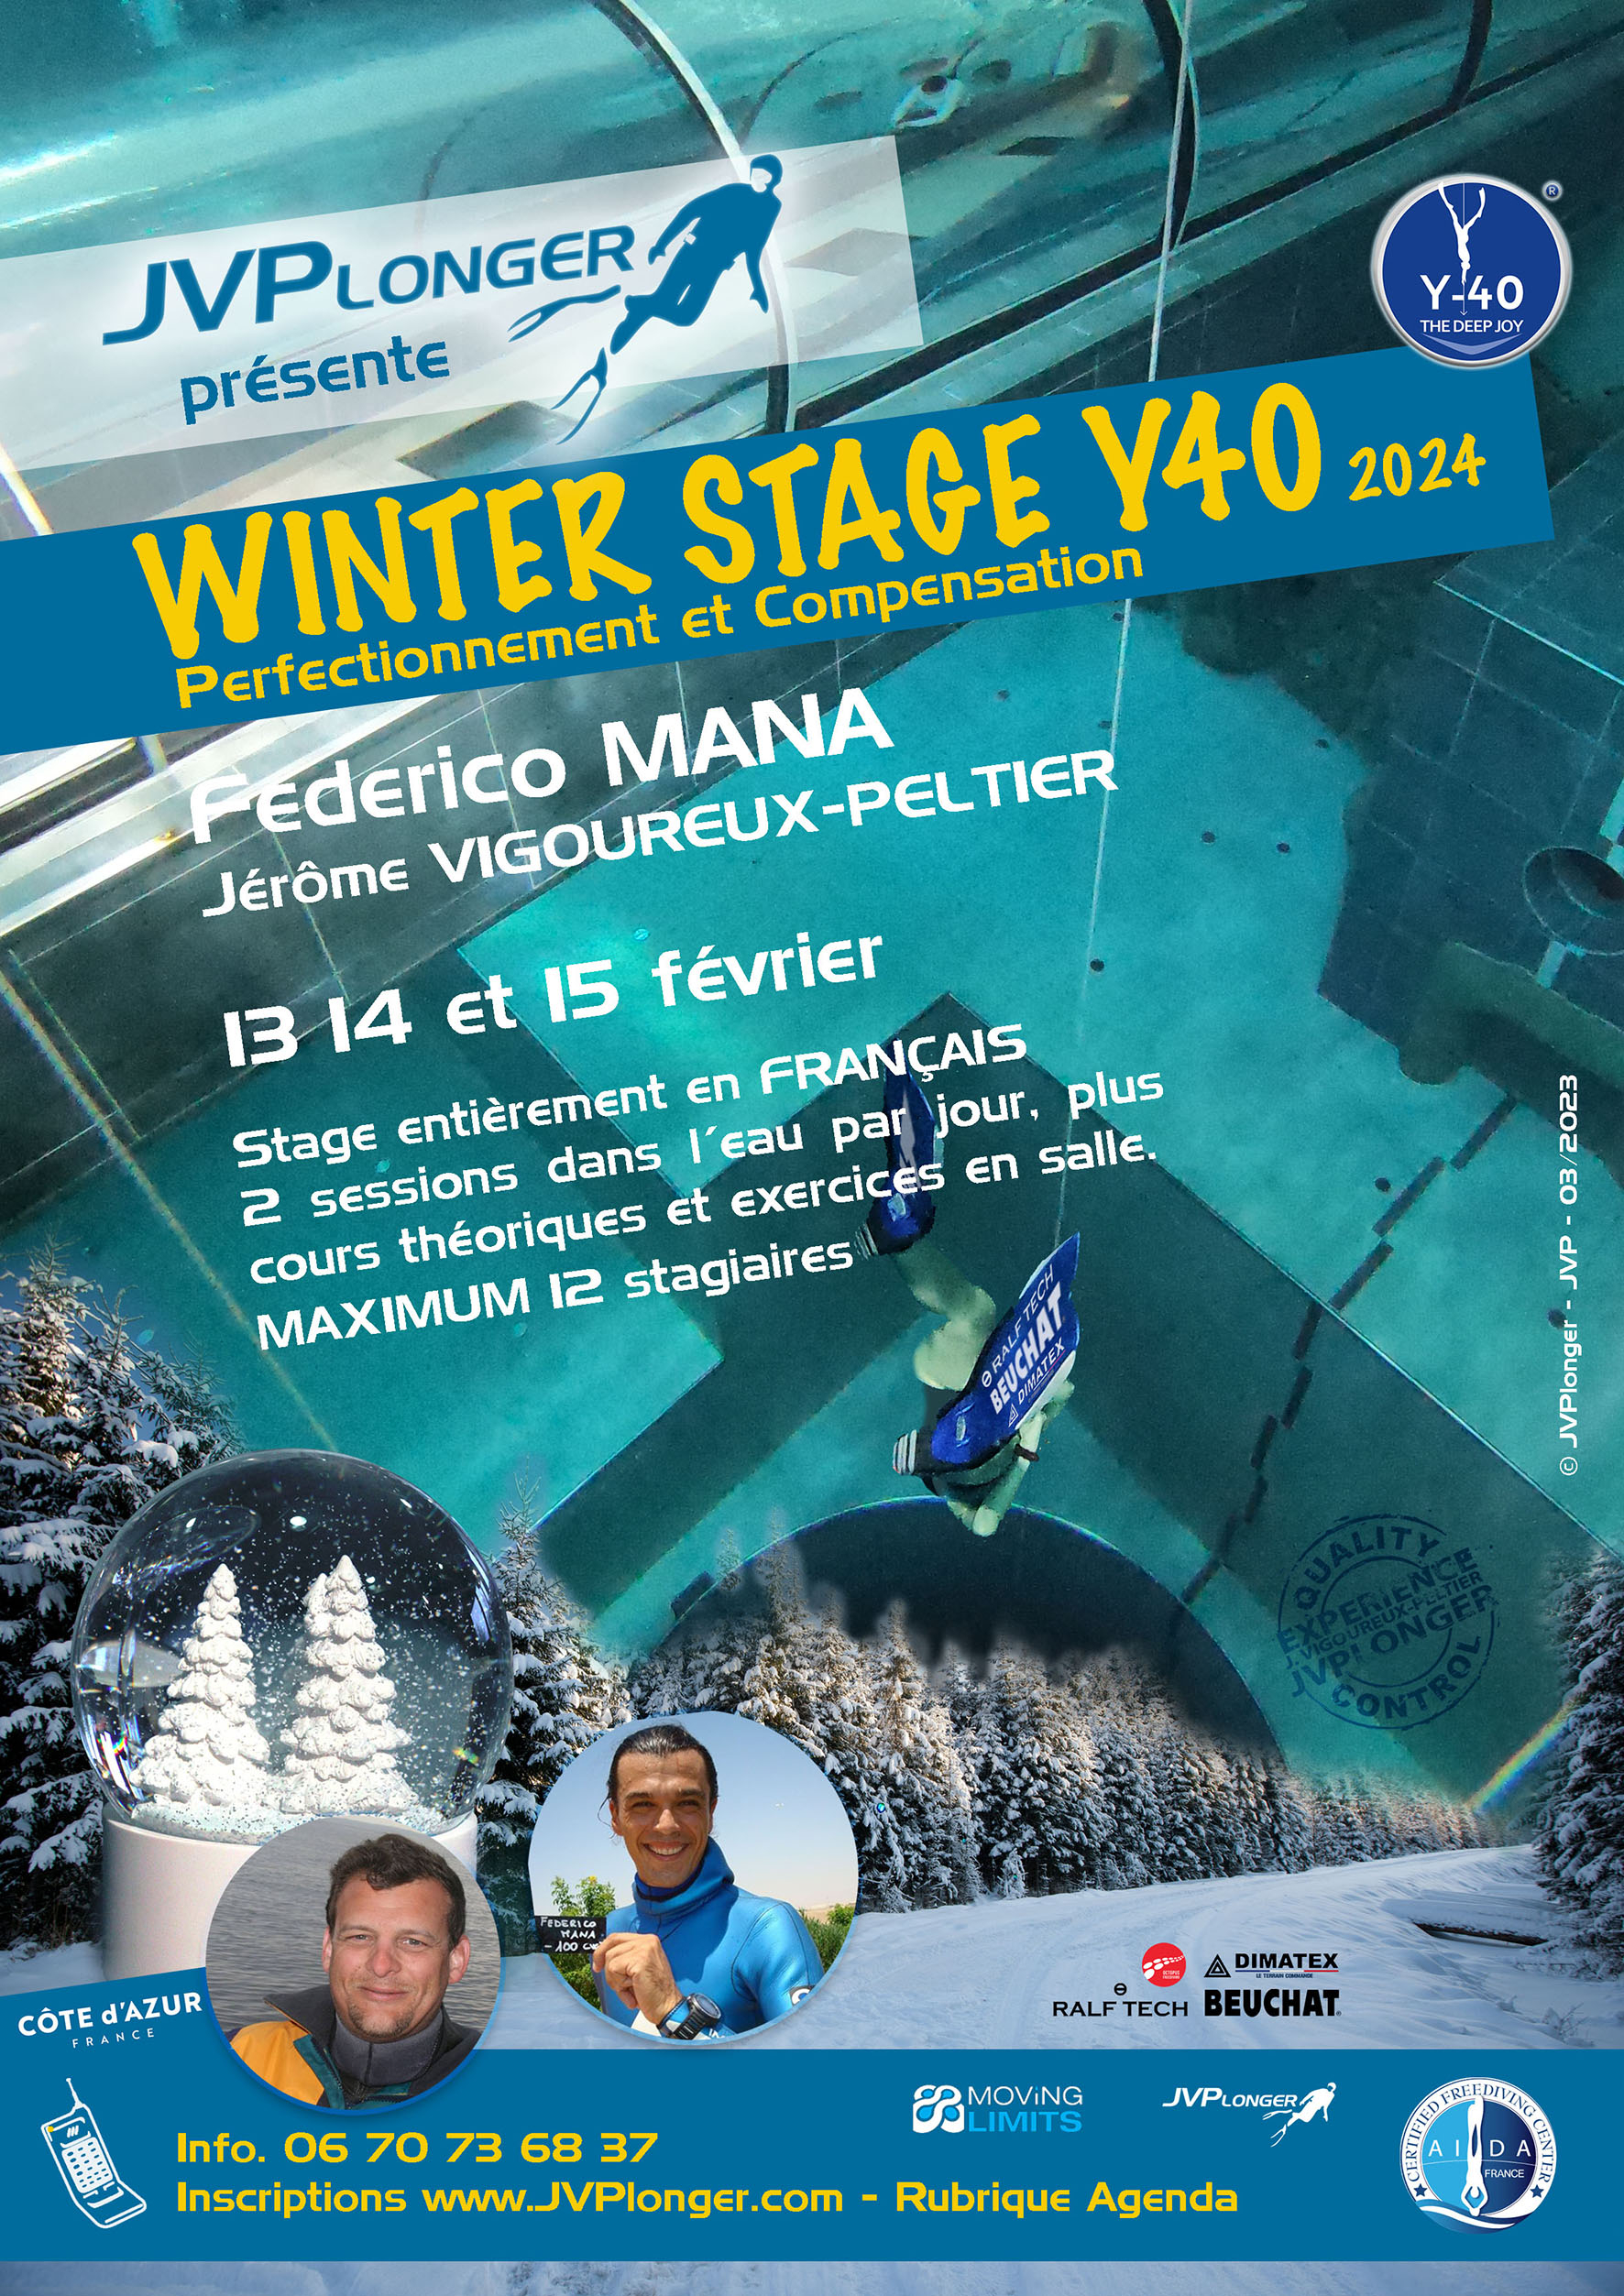 Winter Stage Y40 2024